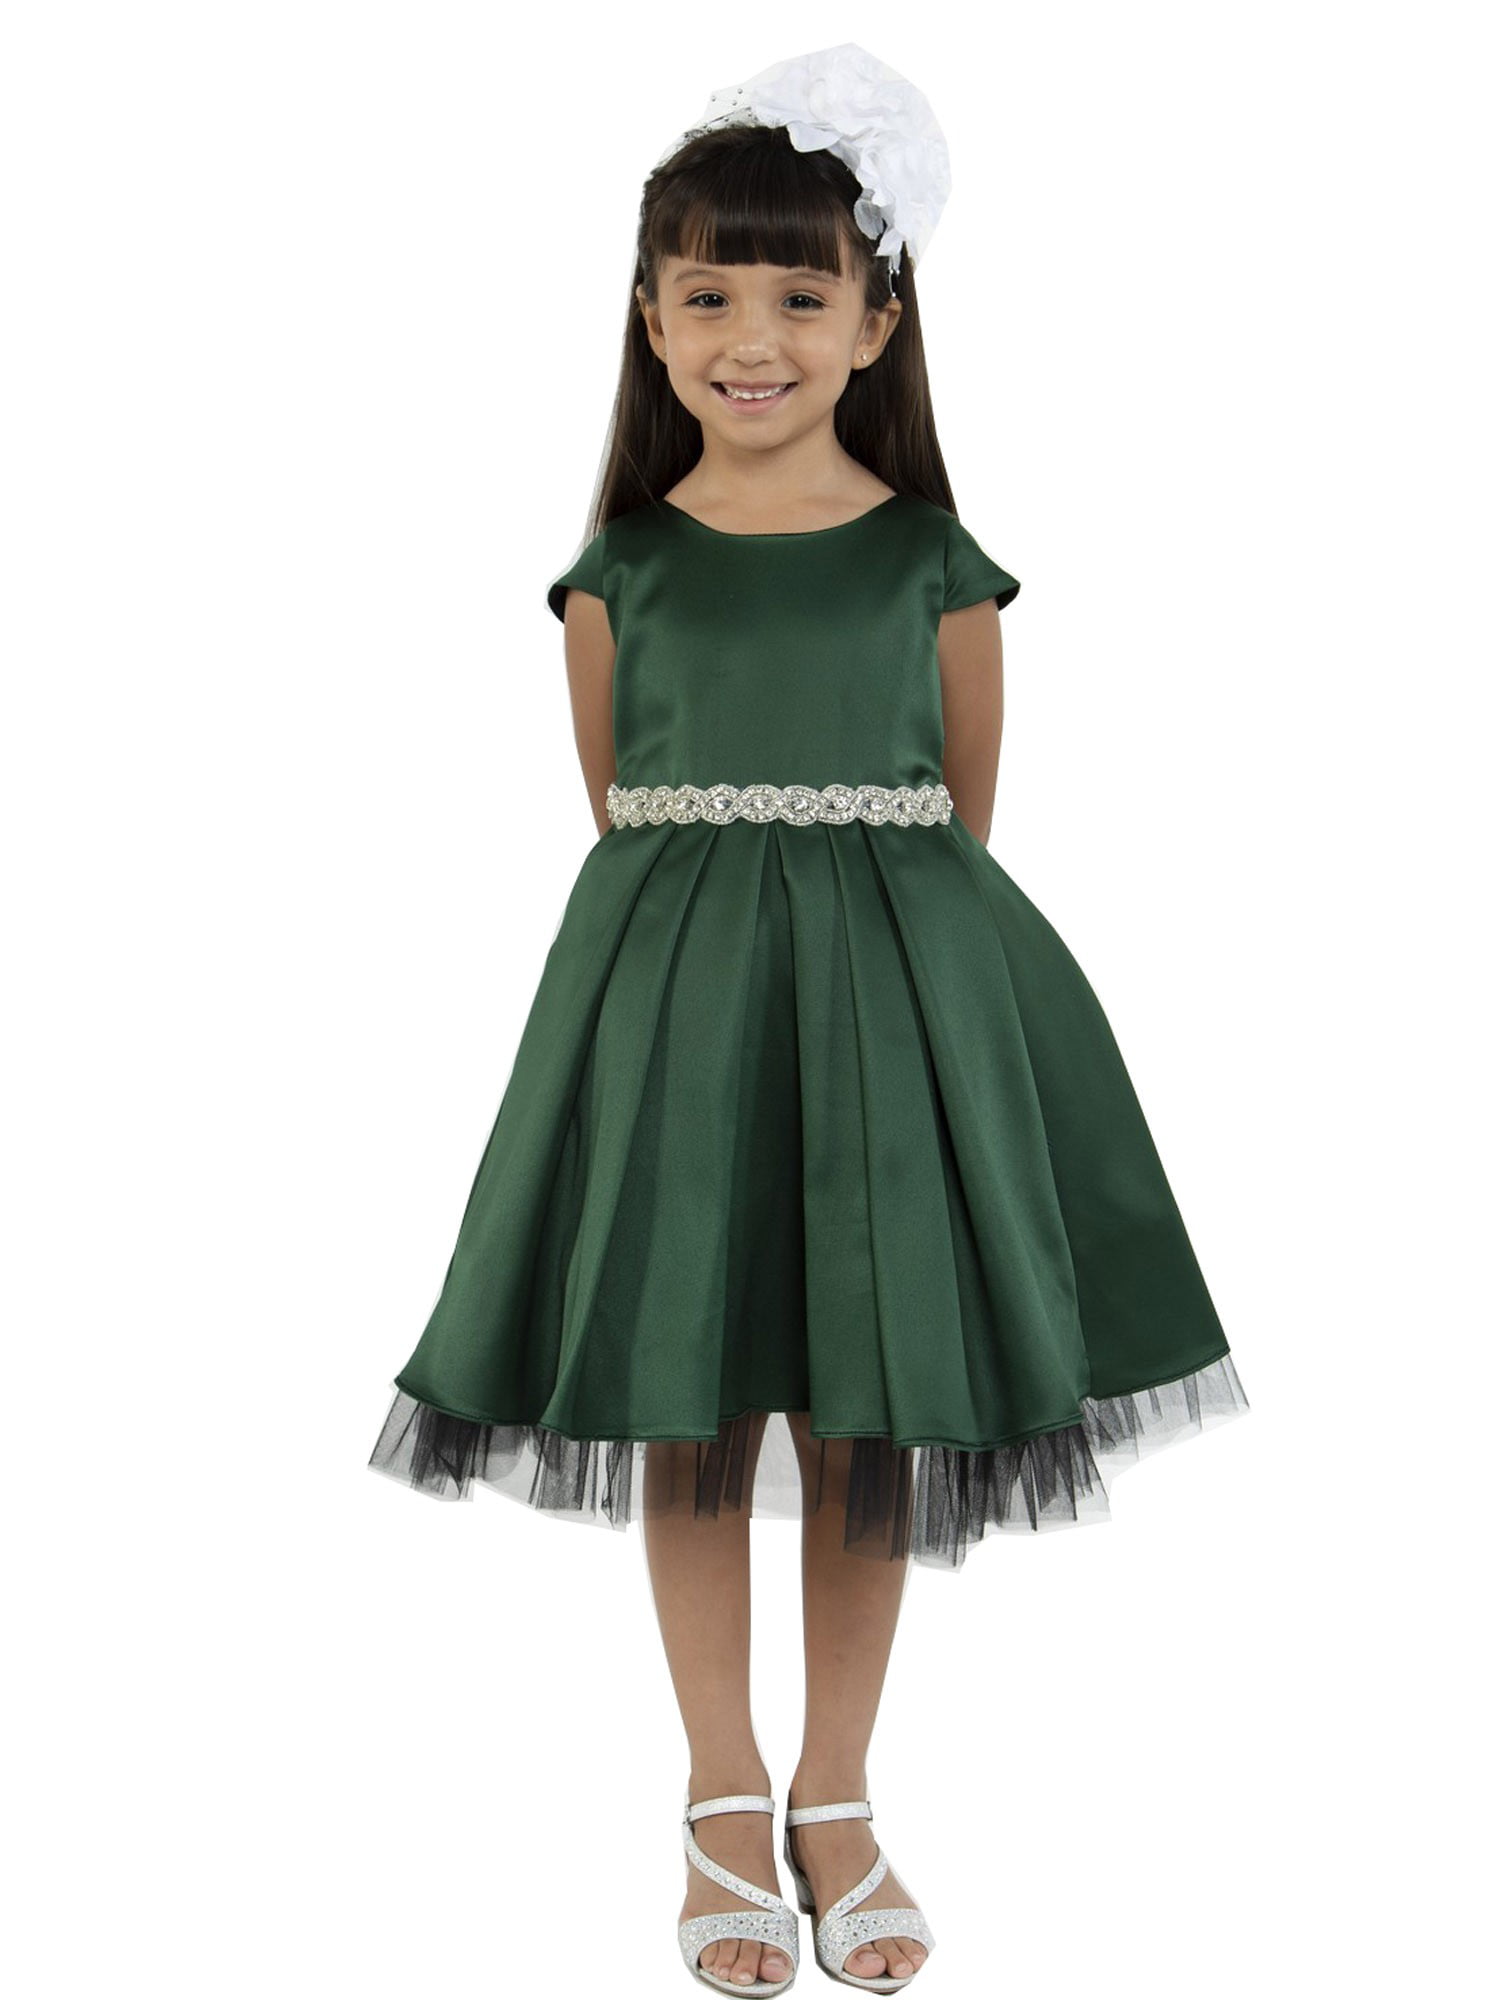 green dress child